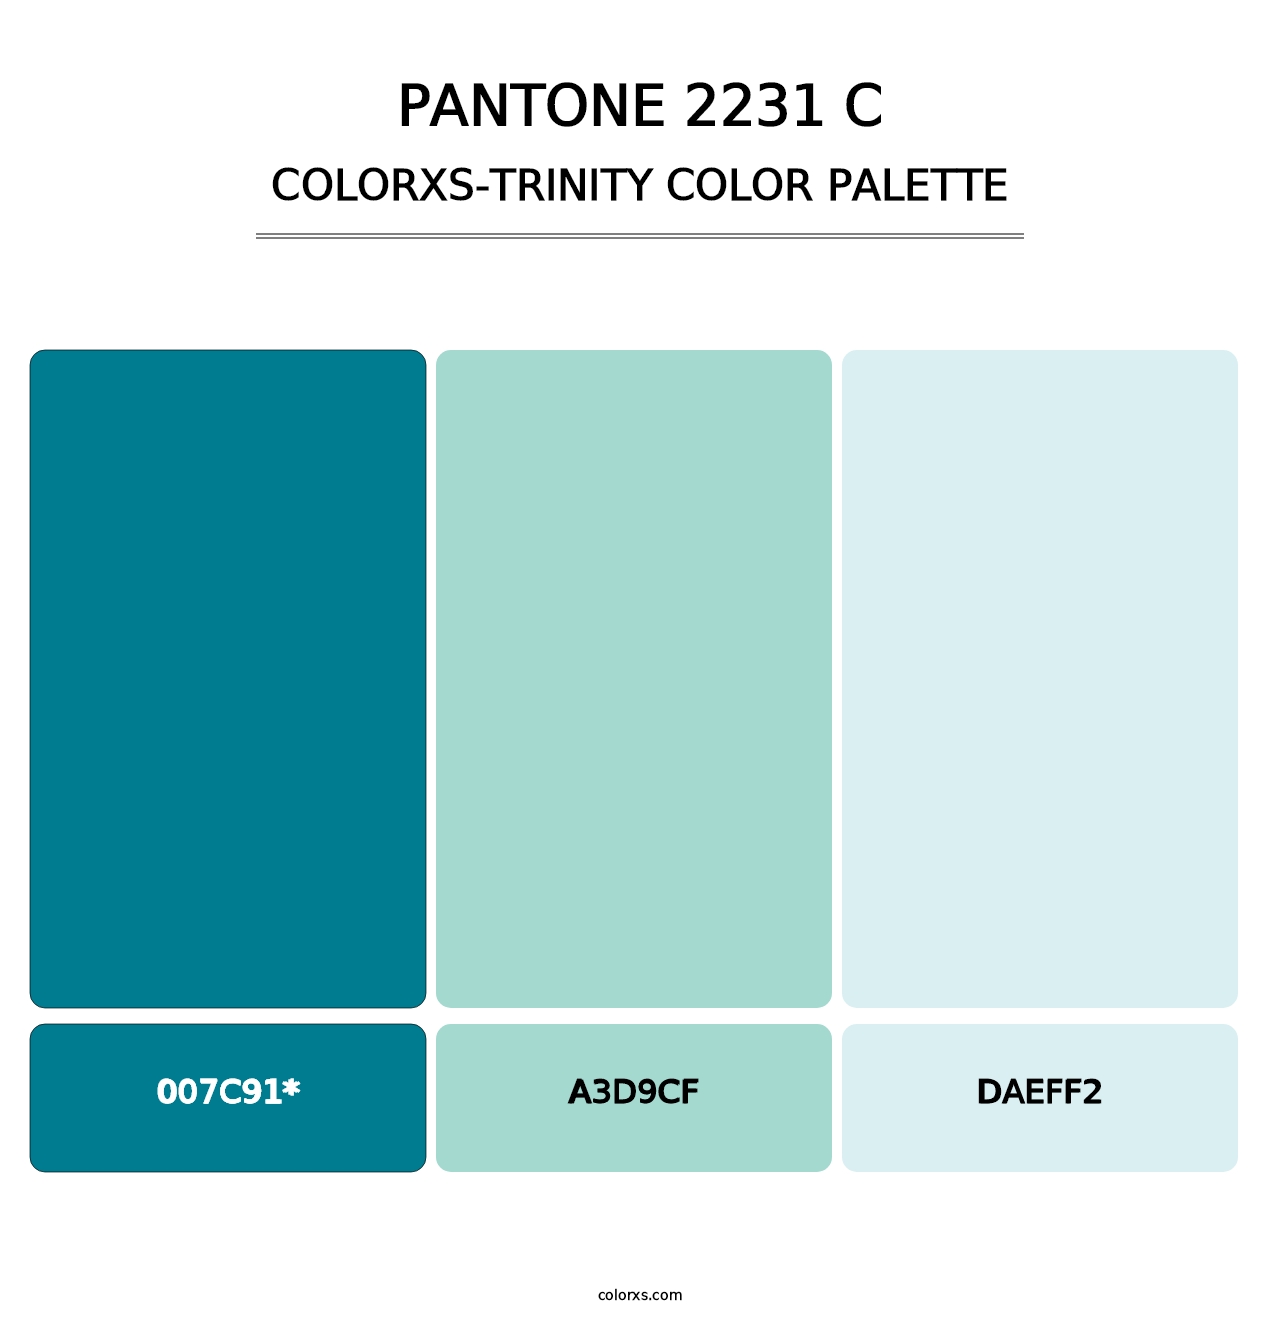 PANTONE 2231 C - Colorxs Trinity Palette